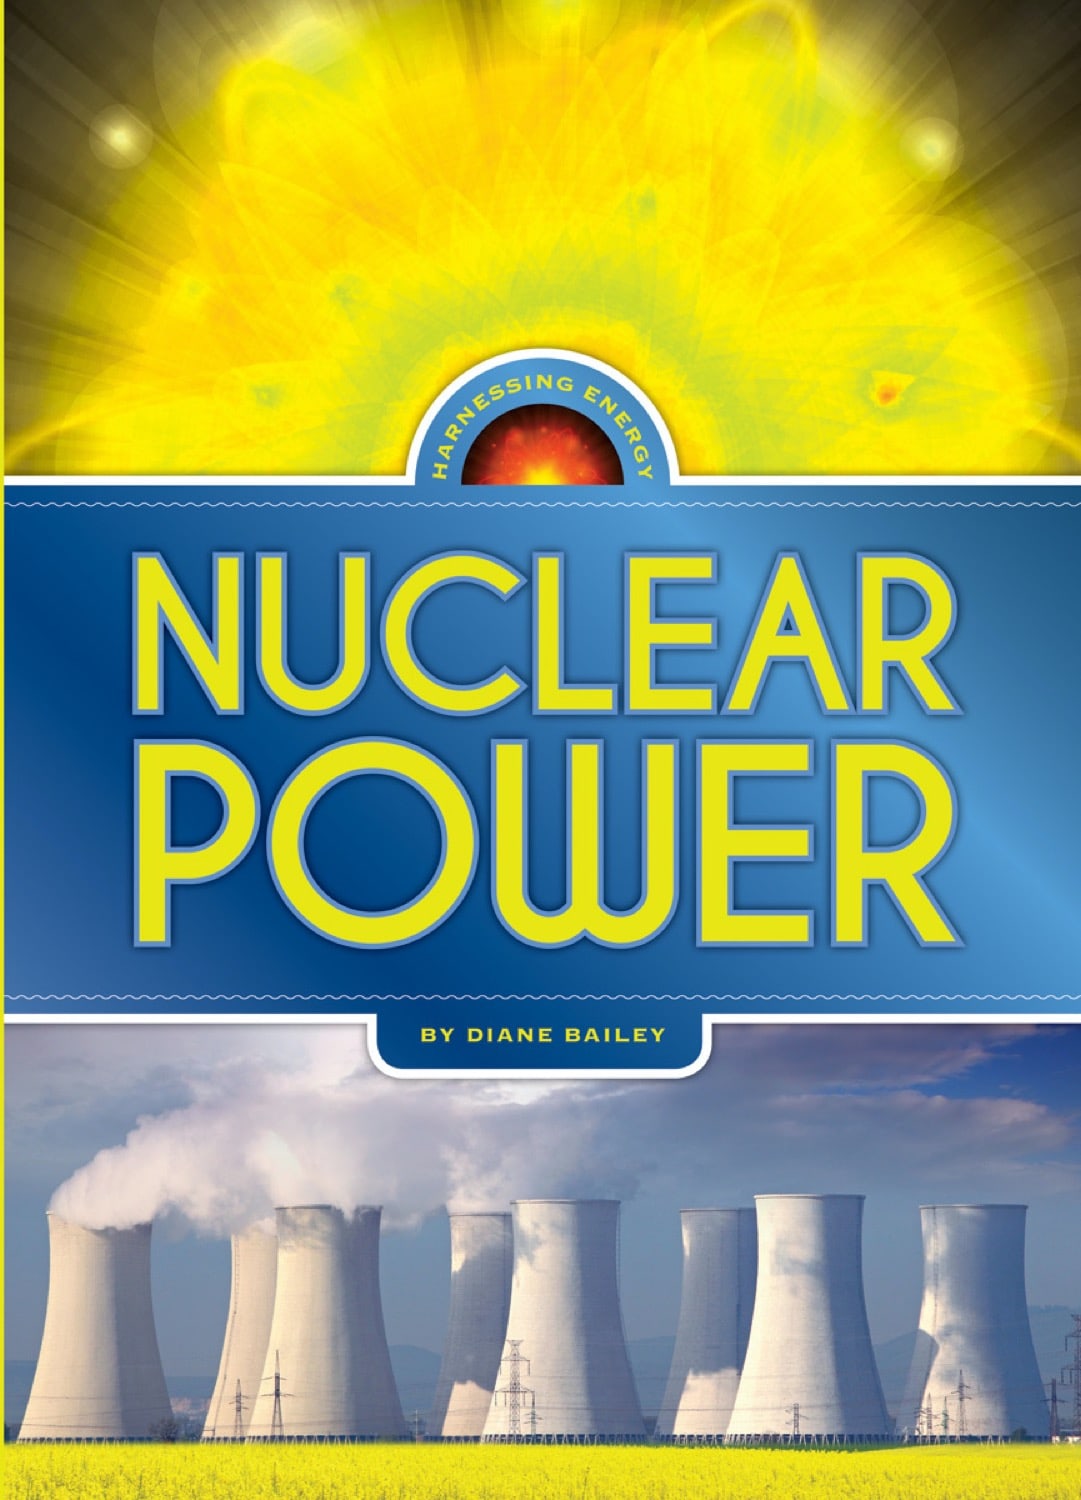 Energie nutzen: Atomkraft